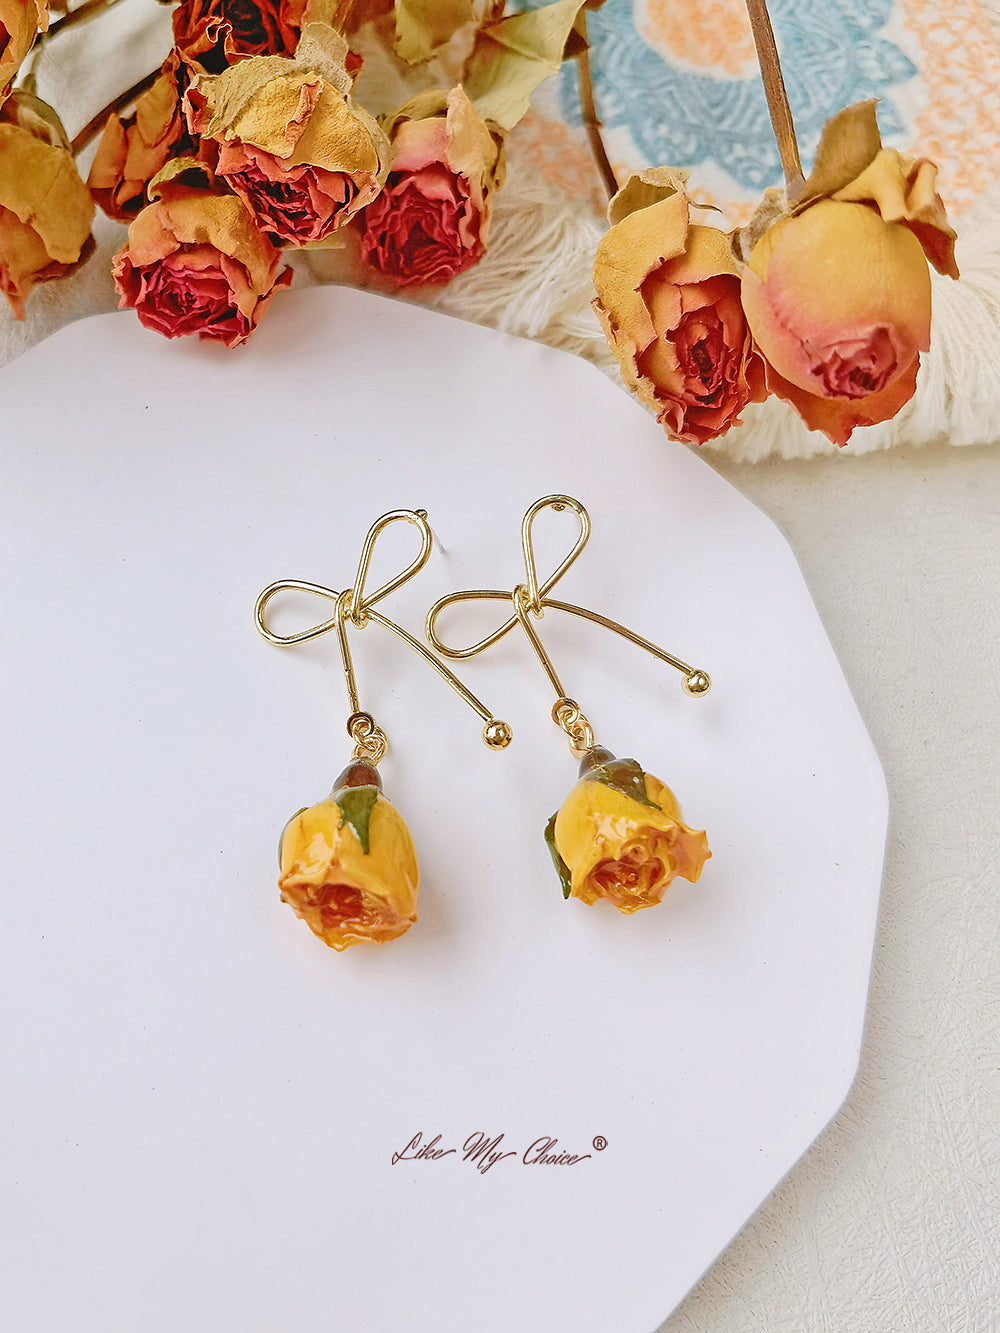 Rose Bow Dried Flowers Earrings